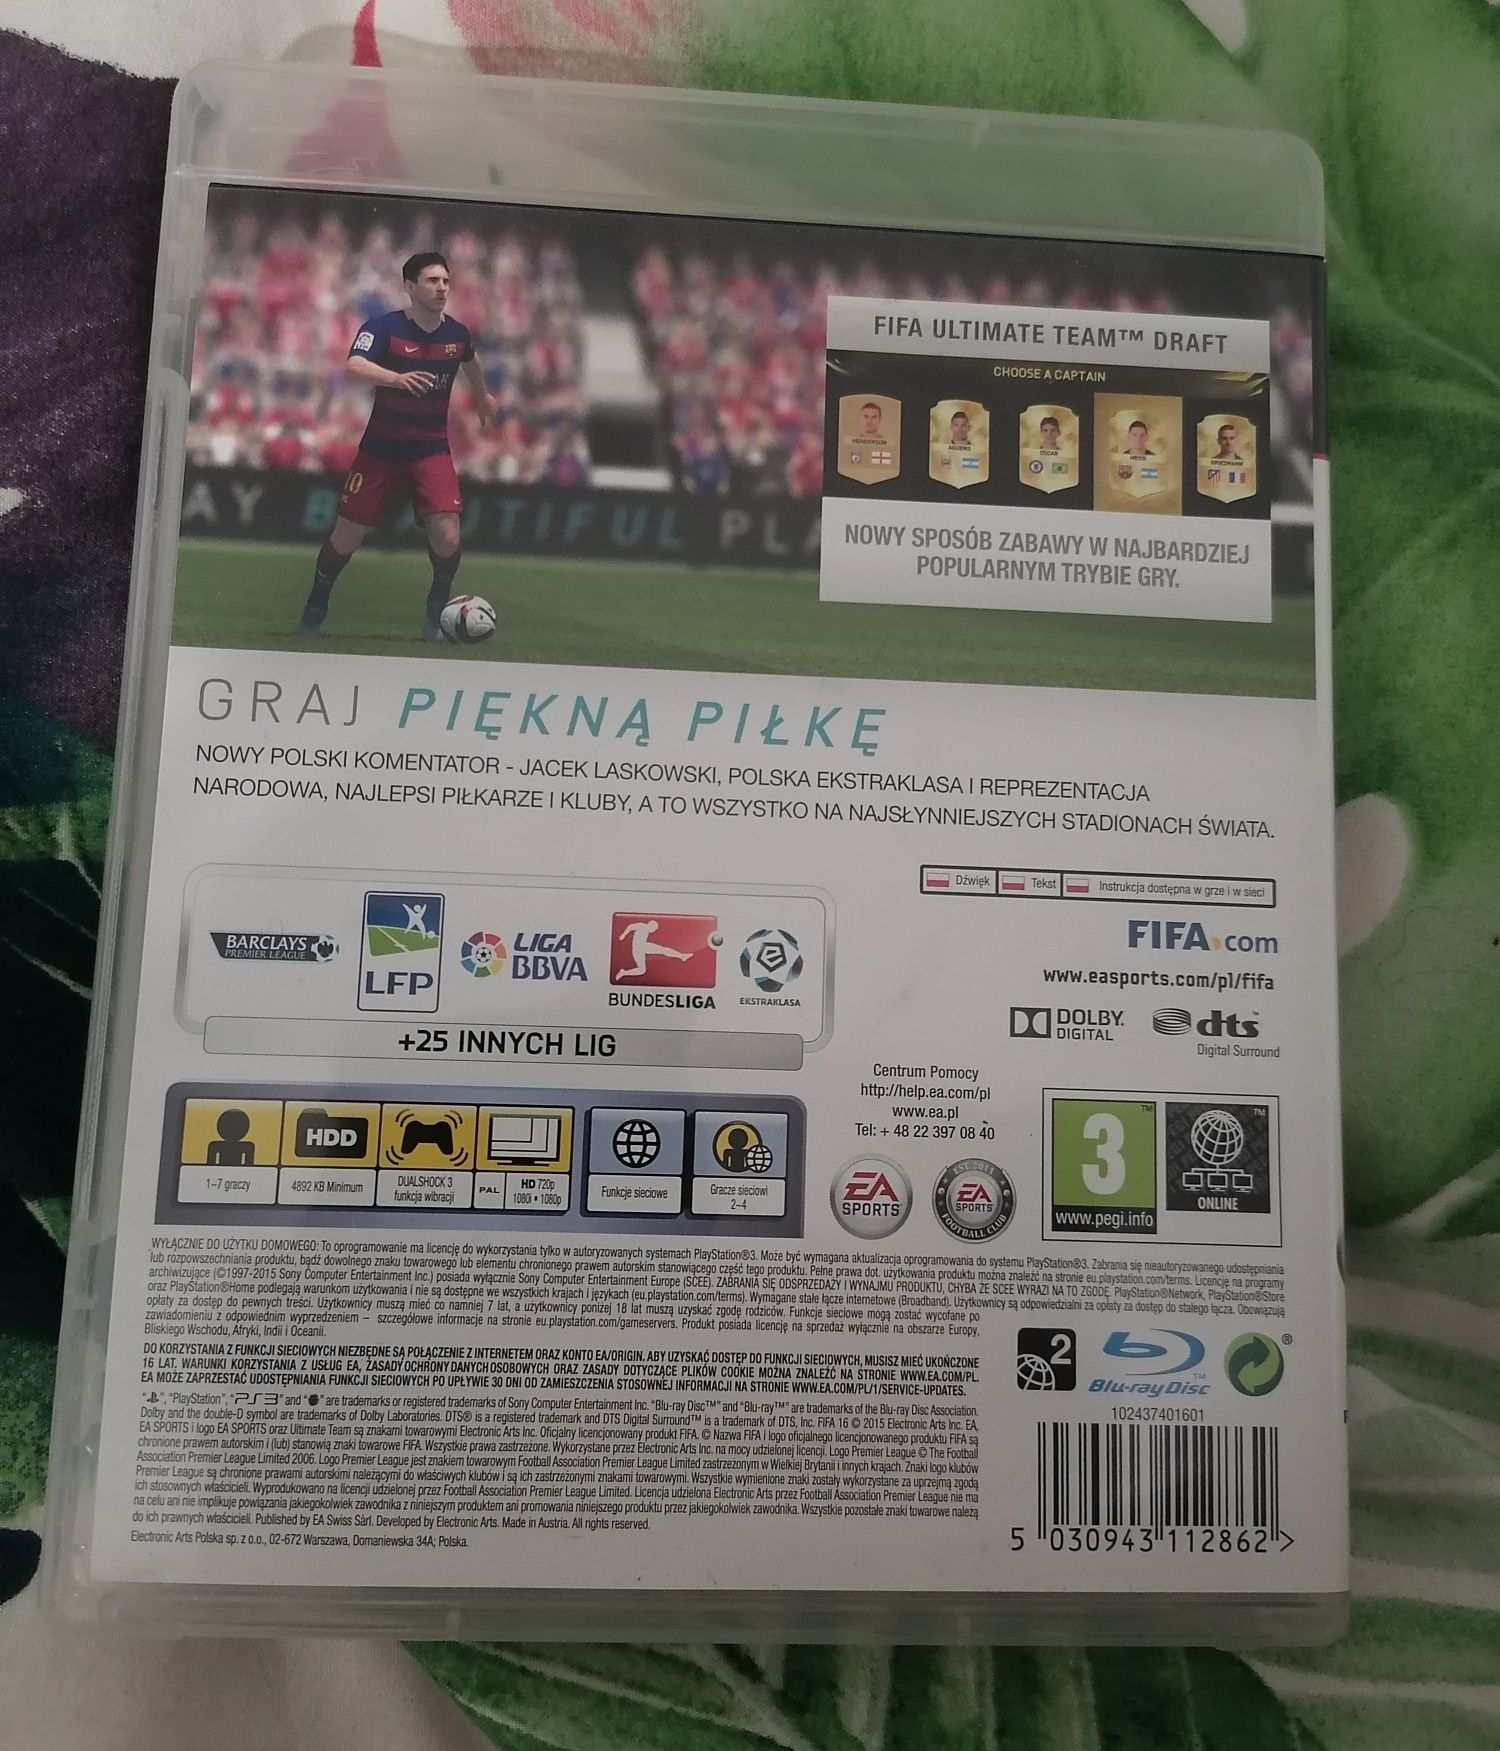 FIFA 16 PlayStation 3